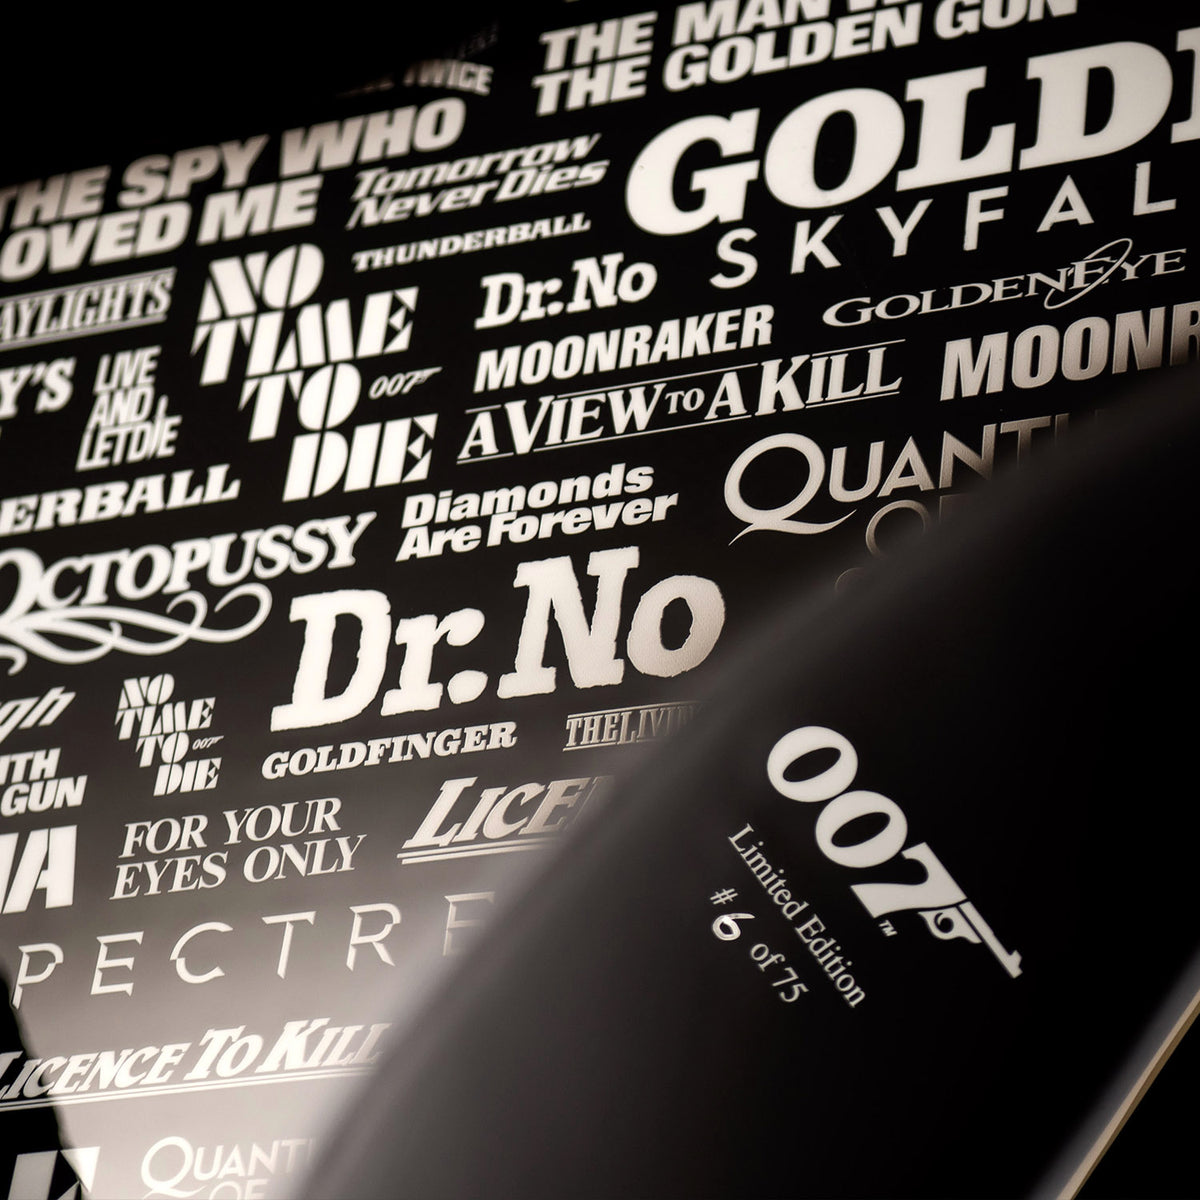 James Bond 007 Guitar - Signed &amp; Numbered David Arnold Edition - By Duesenberg